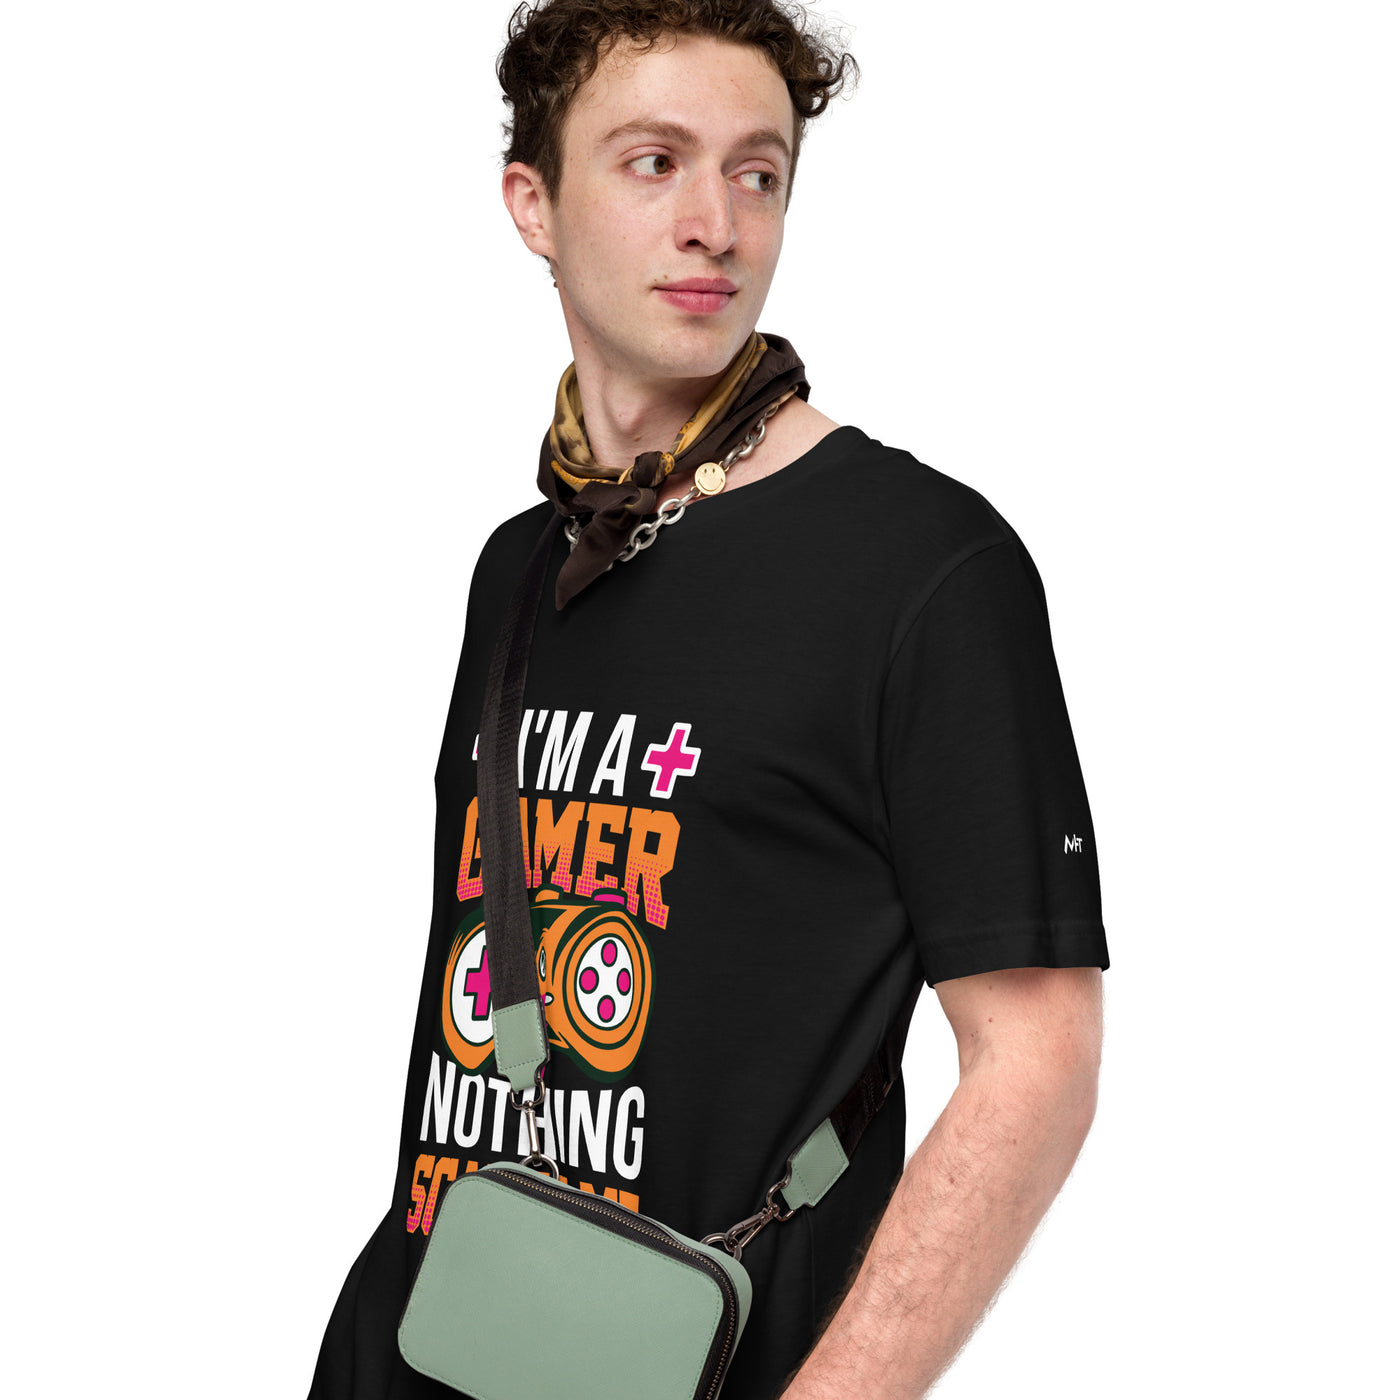 I am a Gamer; Nothing Scares me - Unisex t-shirt